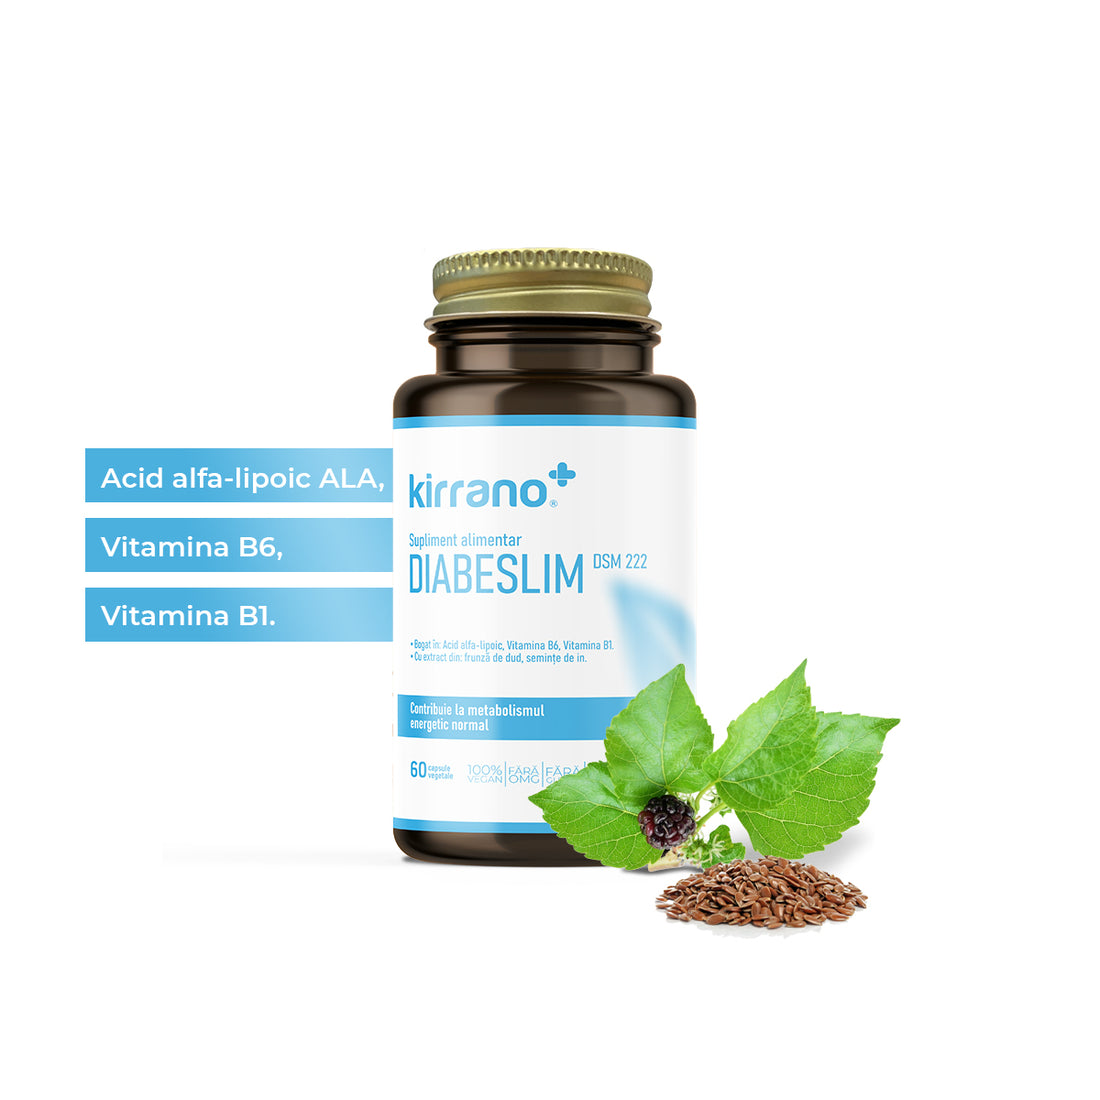 Supliment alimentar: DIABESLIM DSM222 Antioxidant pentru Energie și Sănătate Metabolică